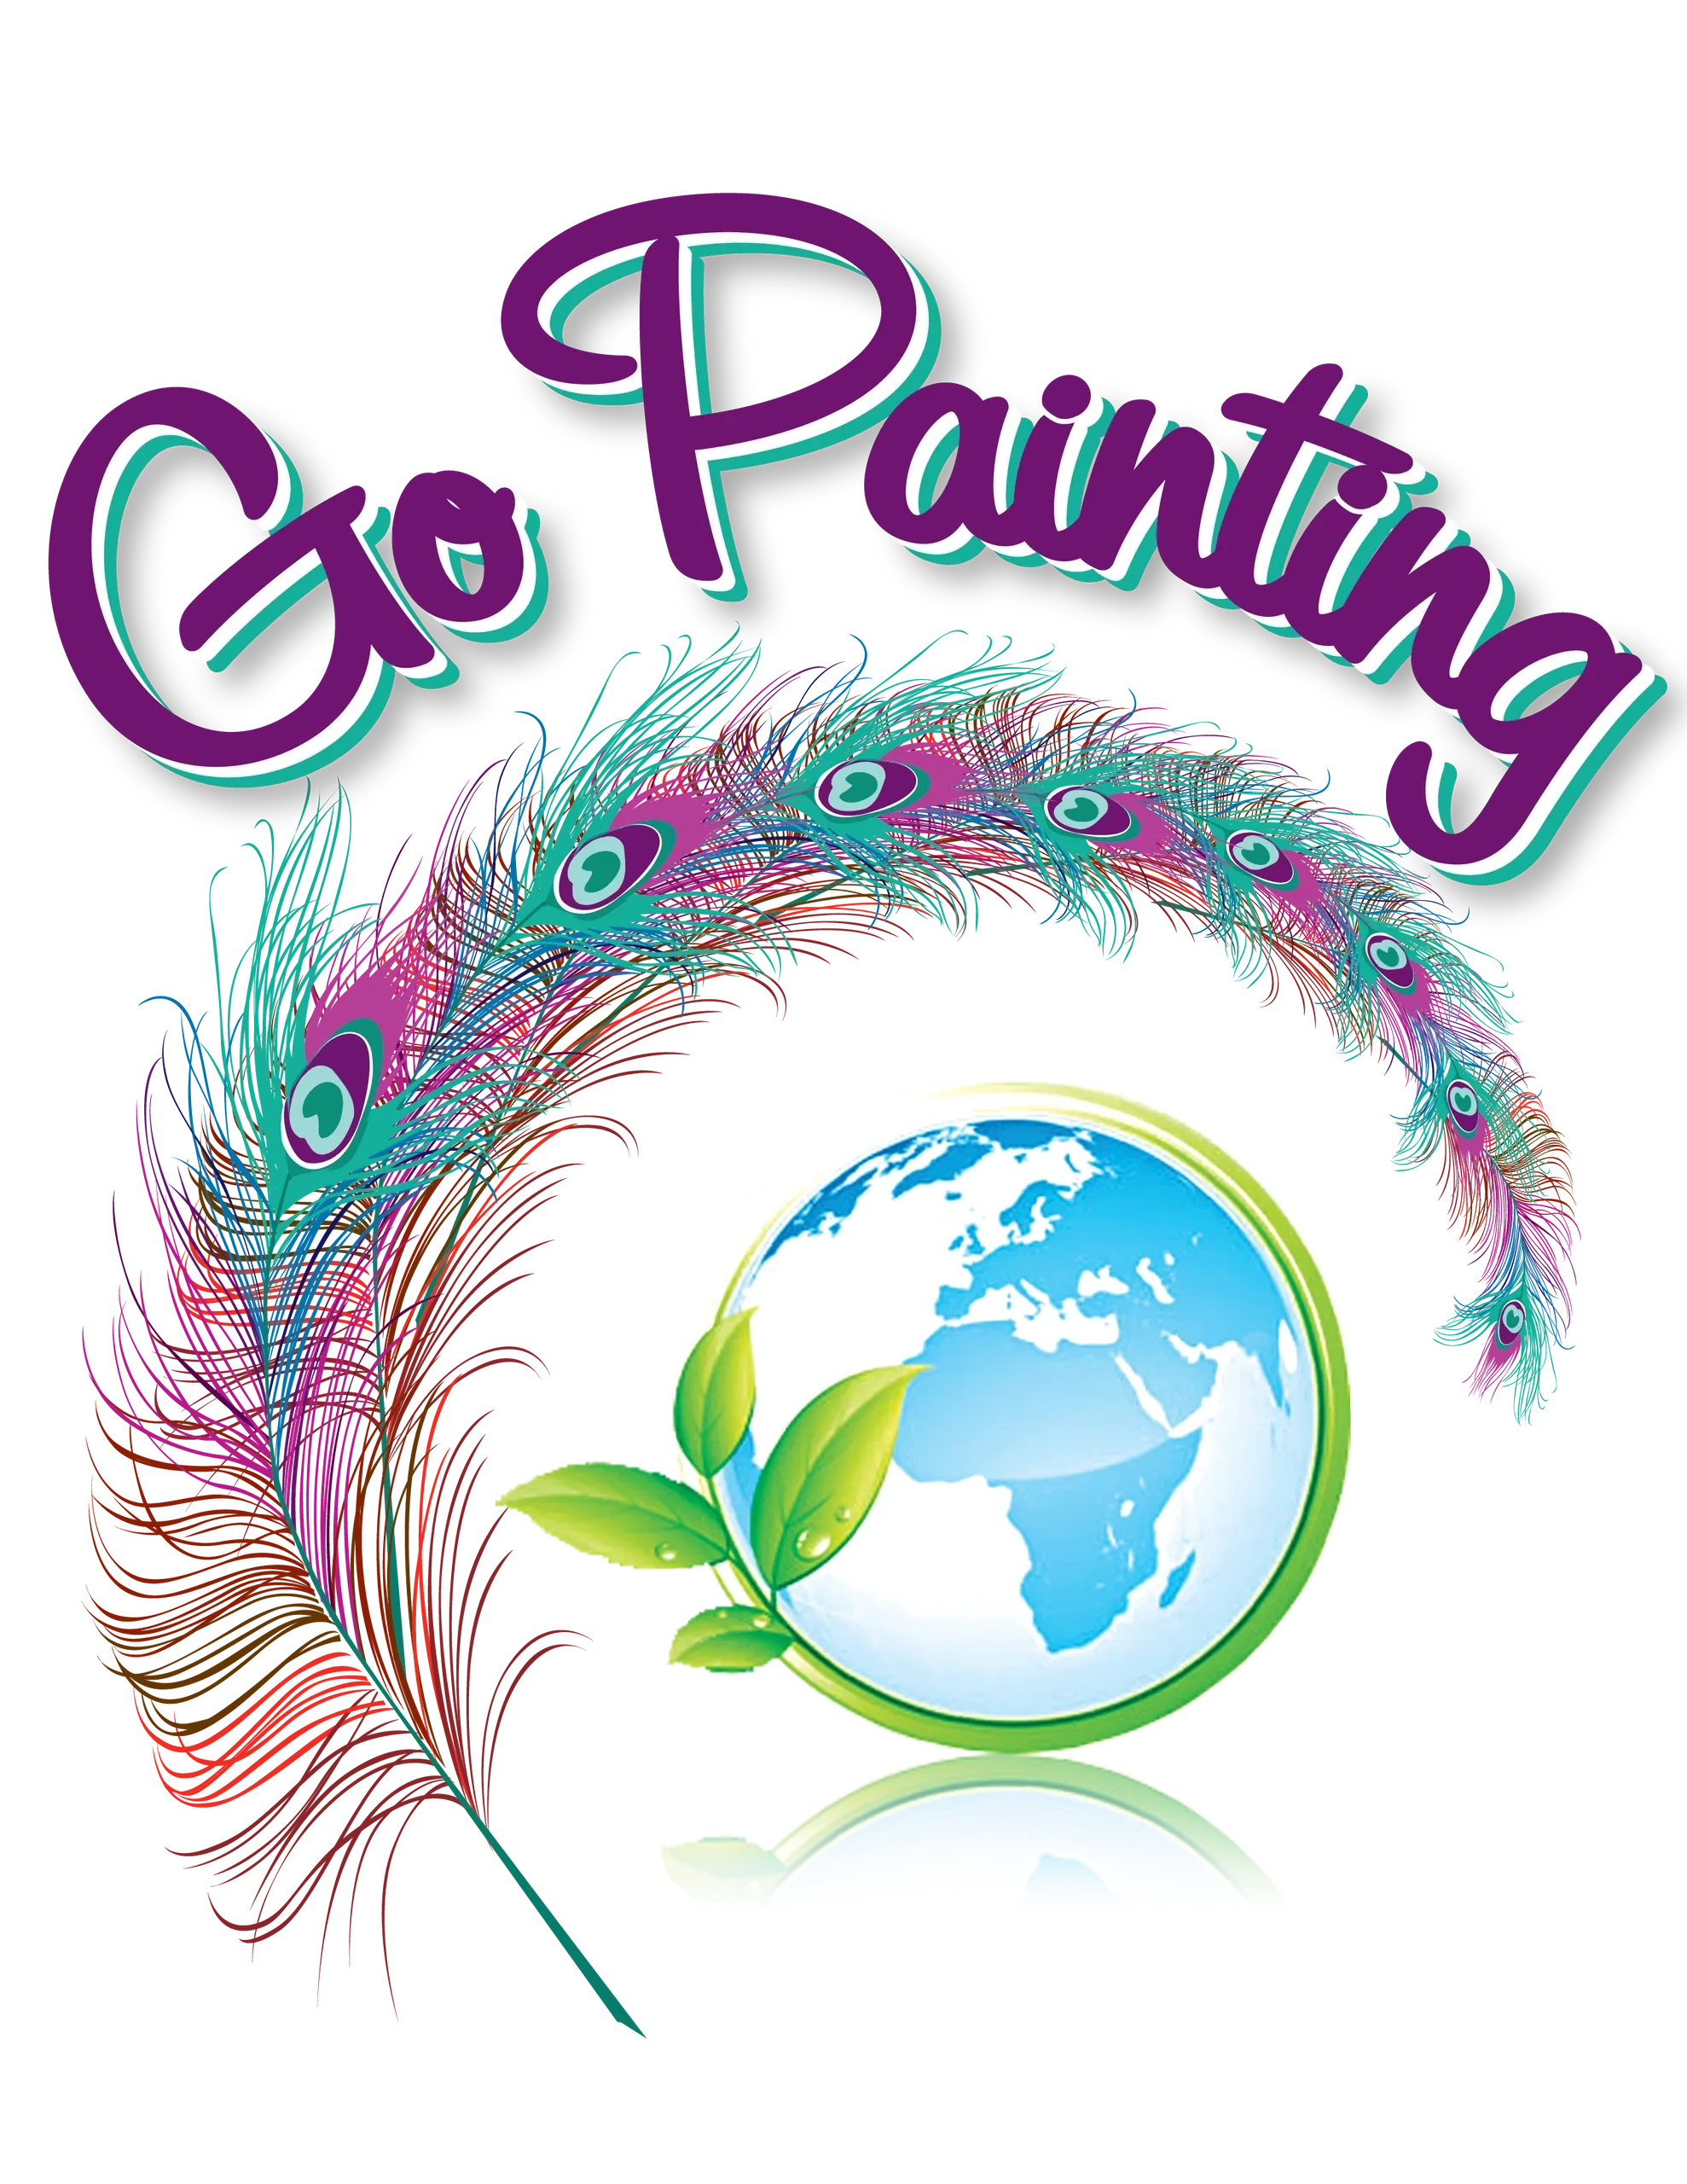 Go Painting Logo